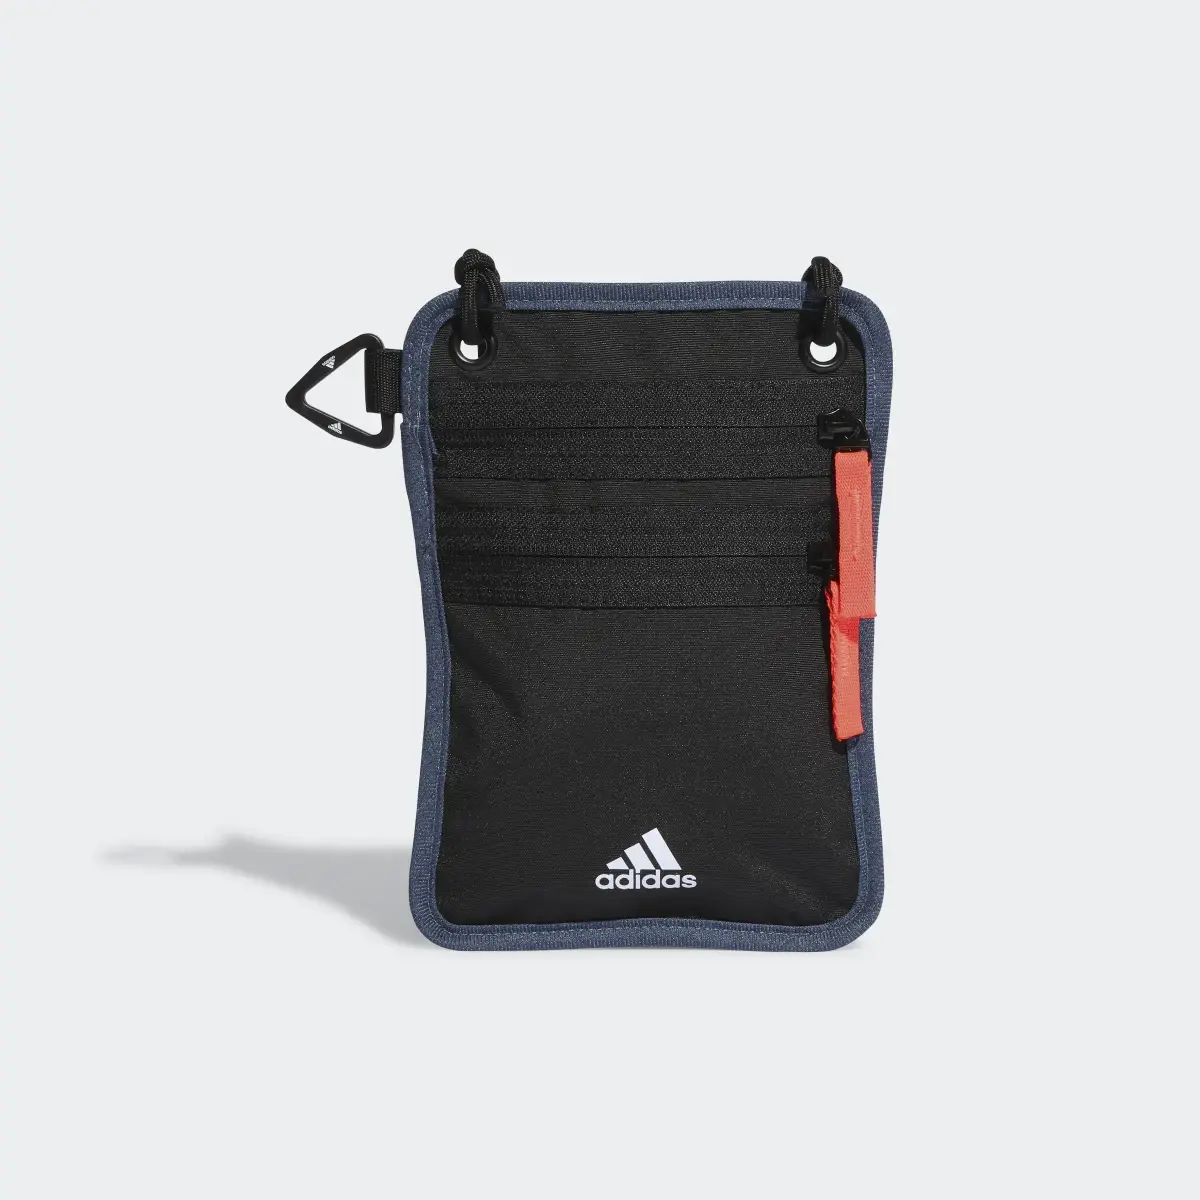 Adidas City Xplorer Mini-Bag. 2